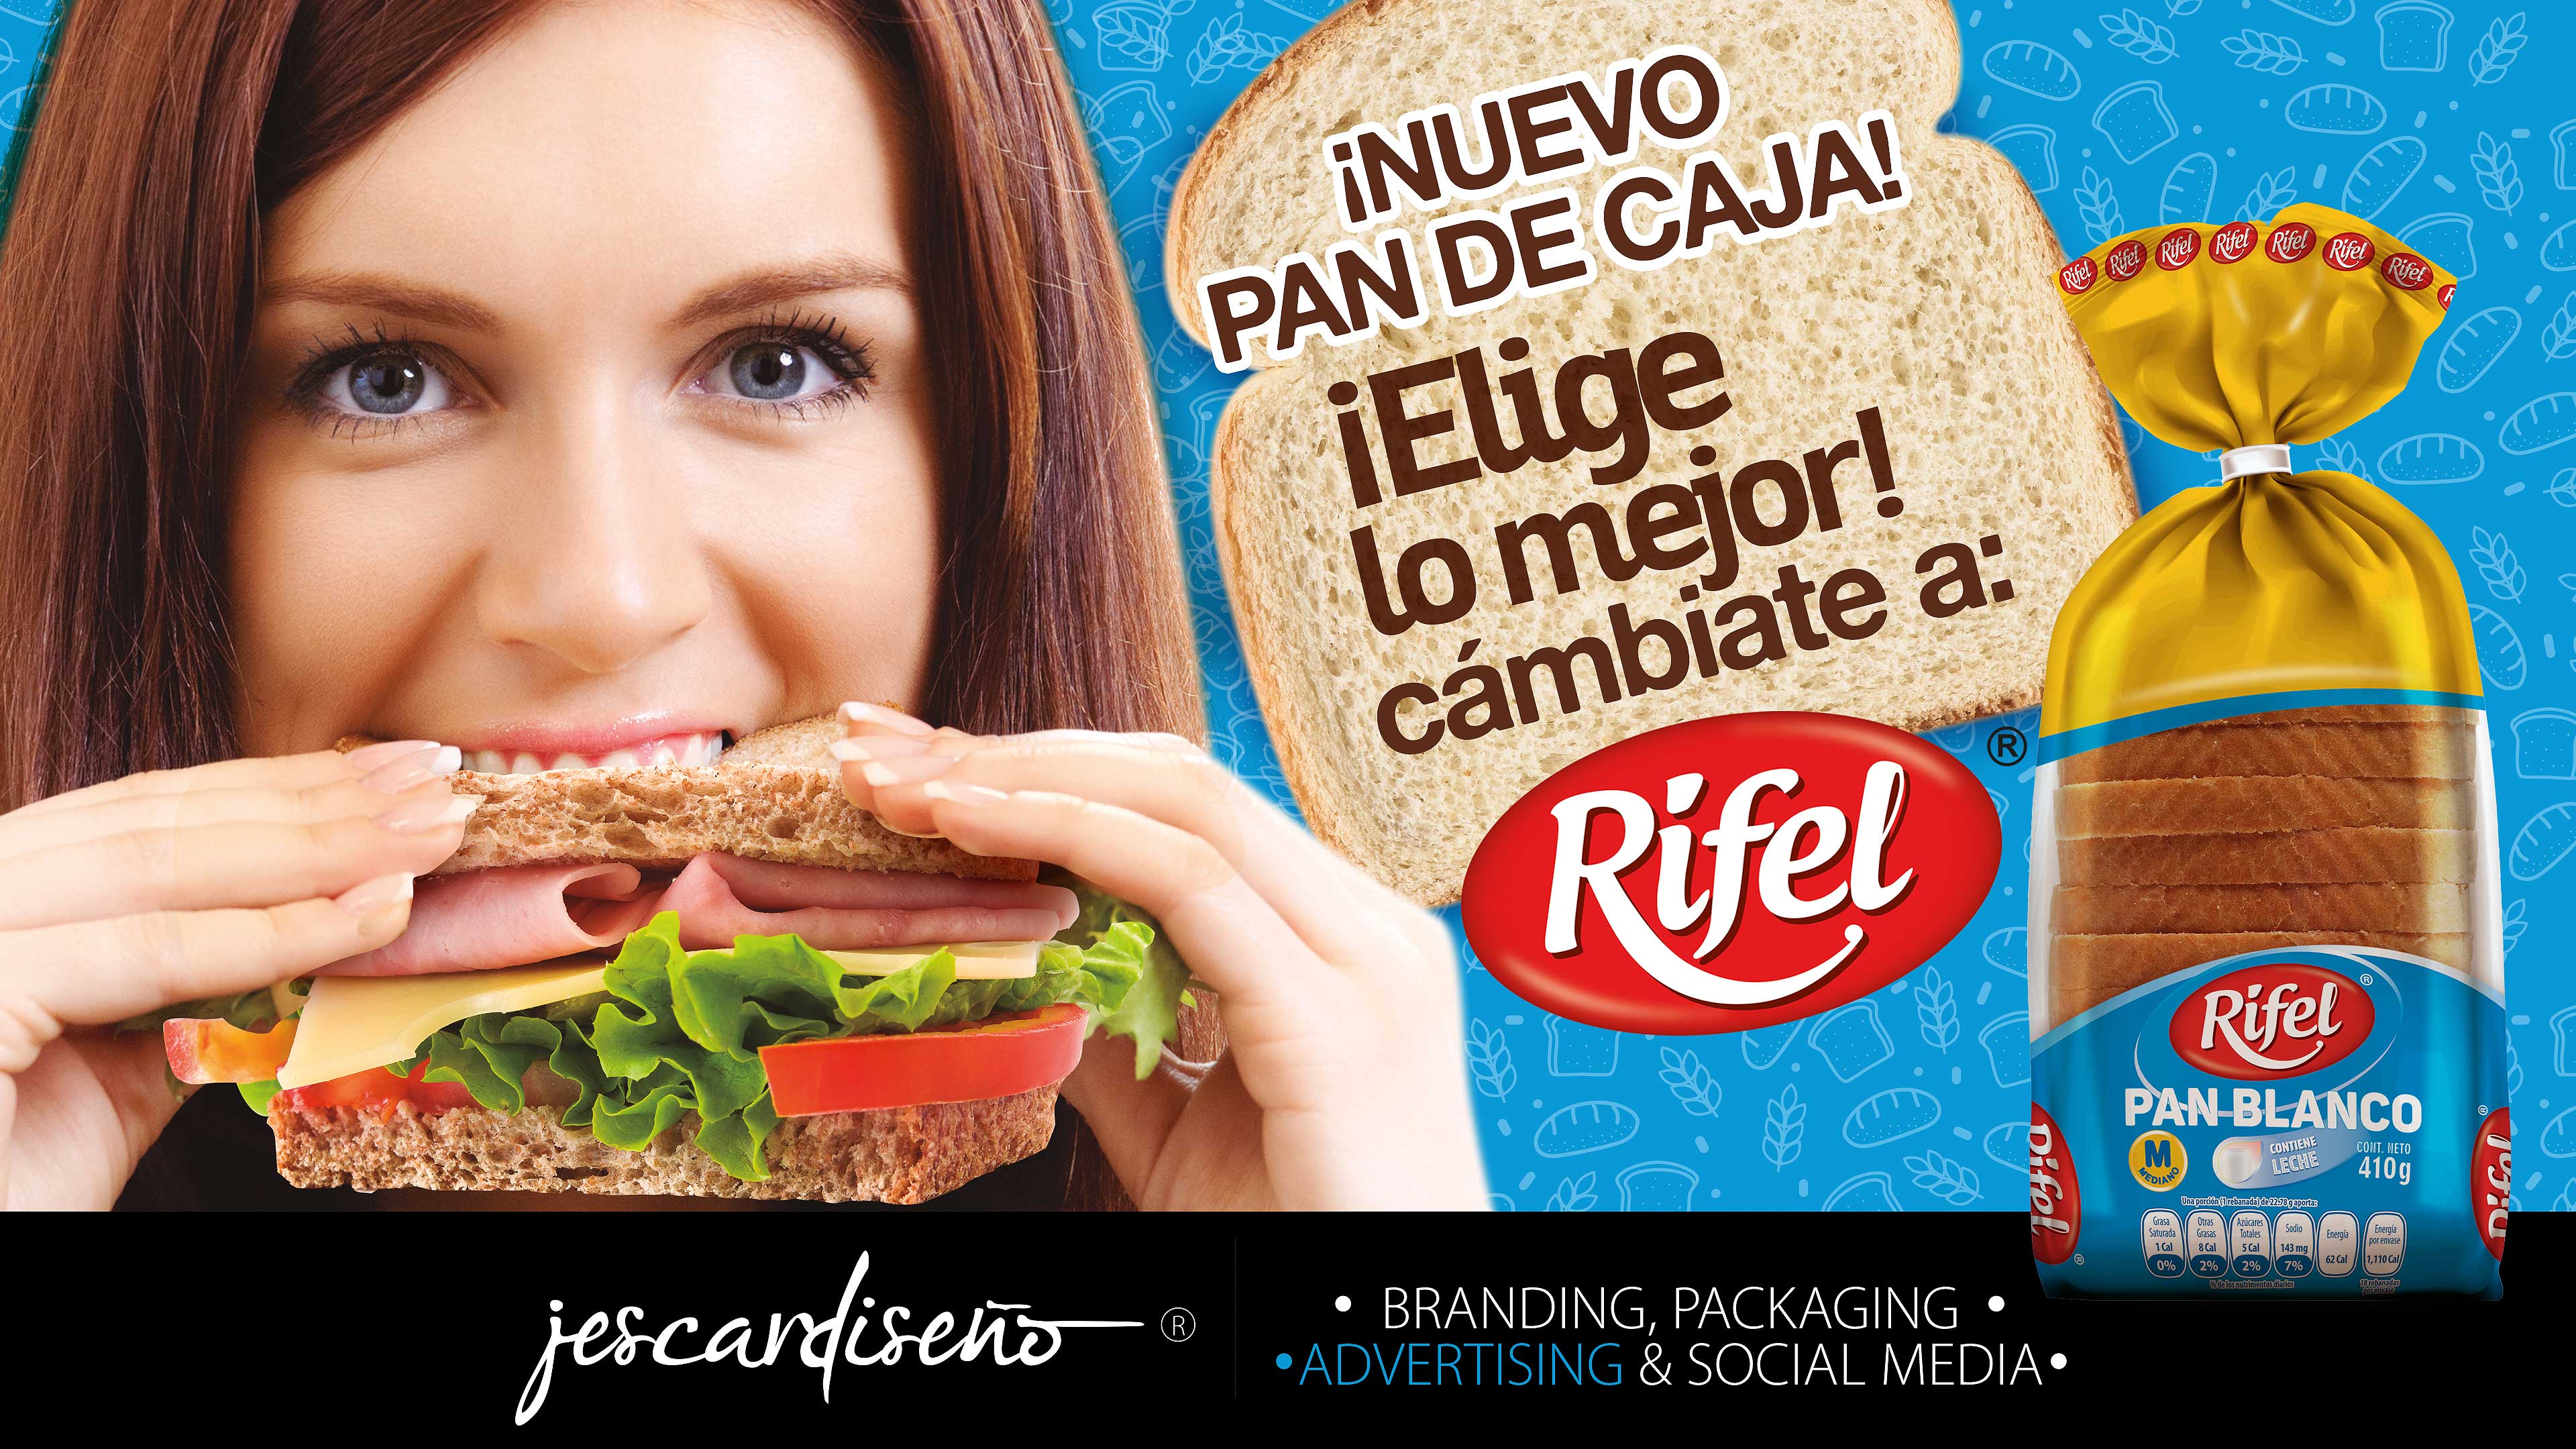 cano rifel pan branding advertising jescardiseno